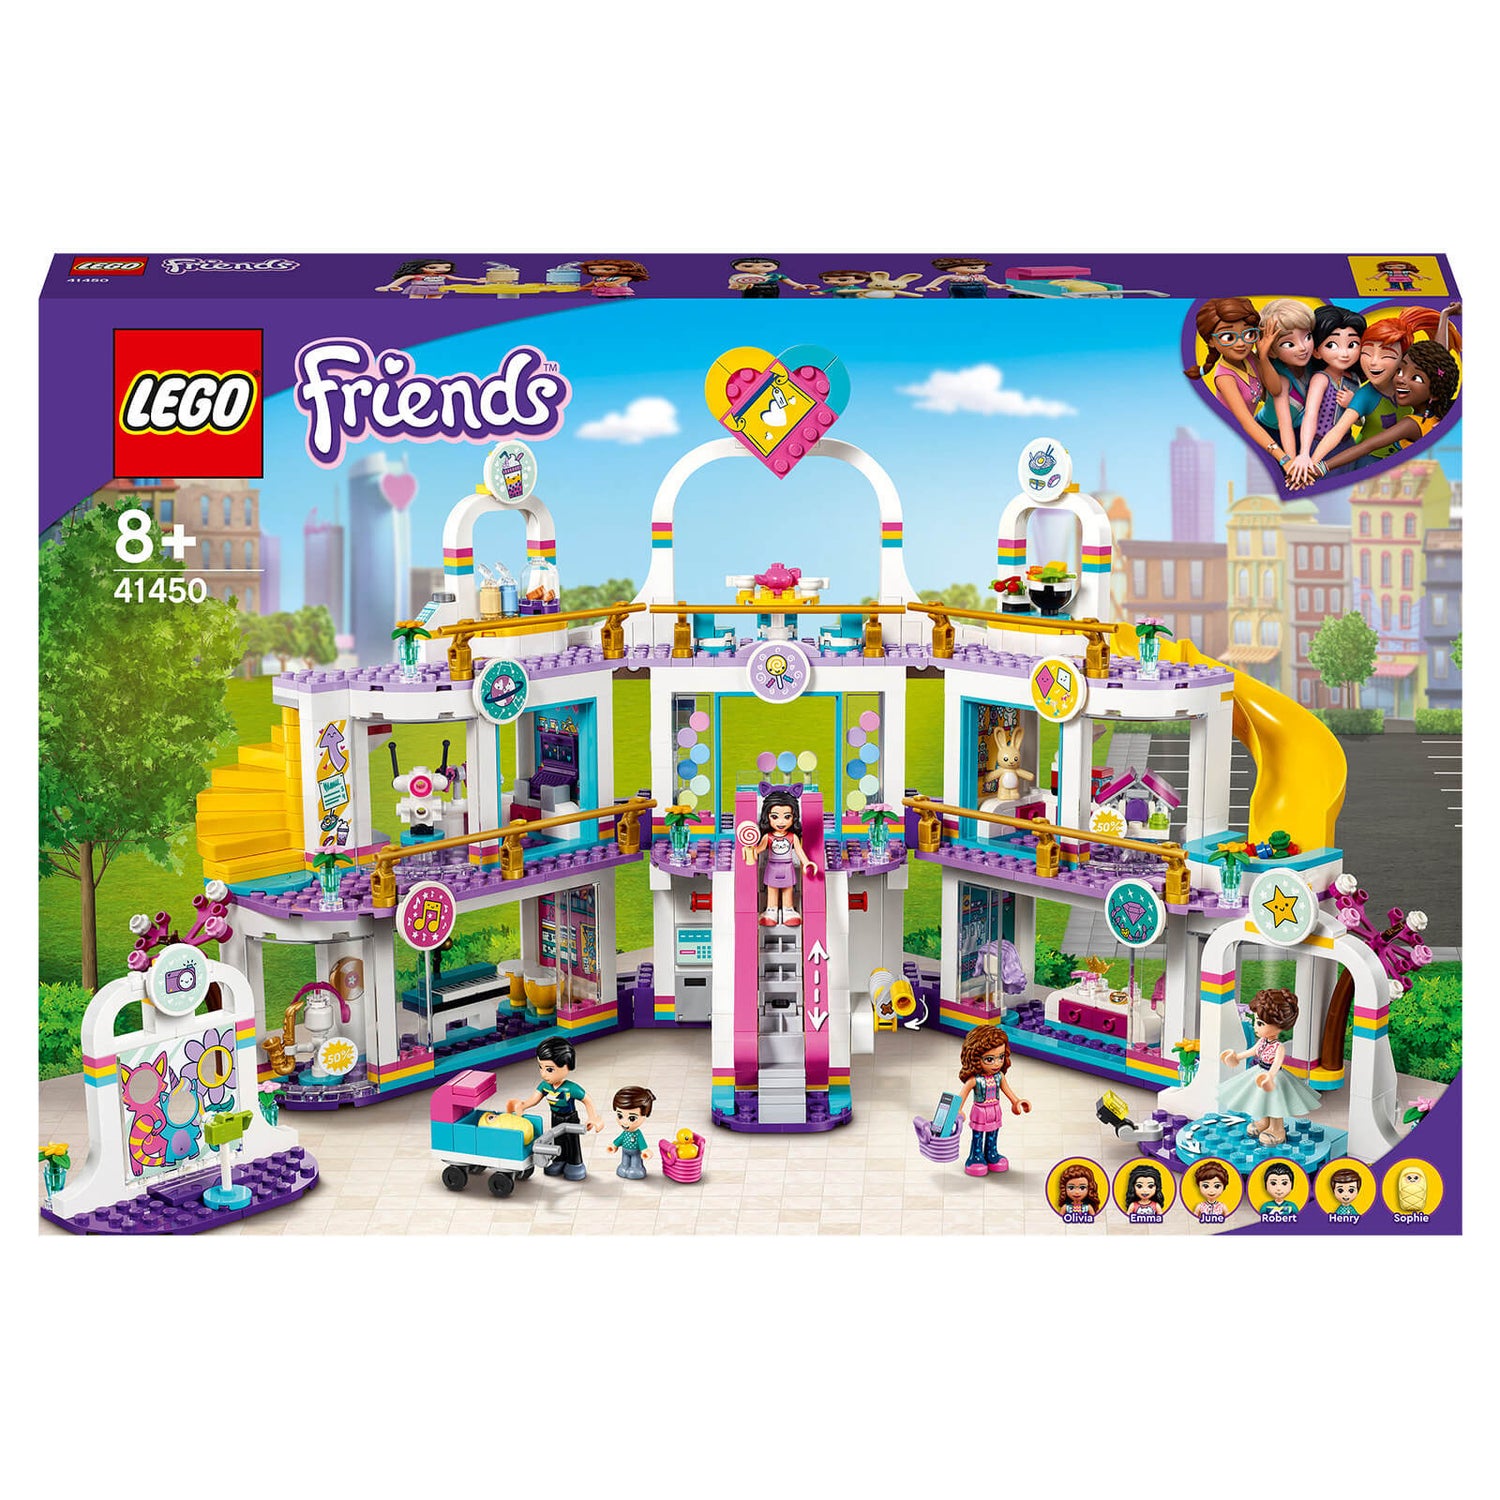 LEGO Friends: Heartlake City: Shopping Mall Building Set (41450)